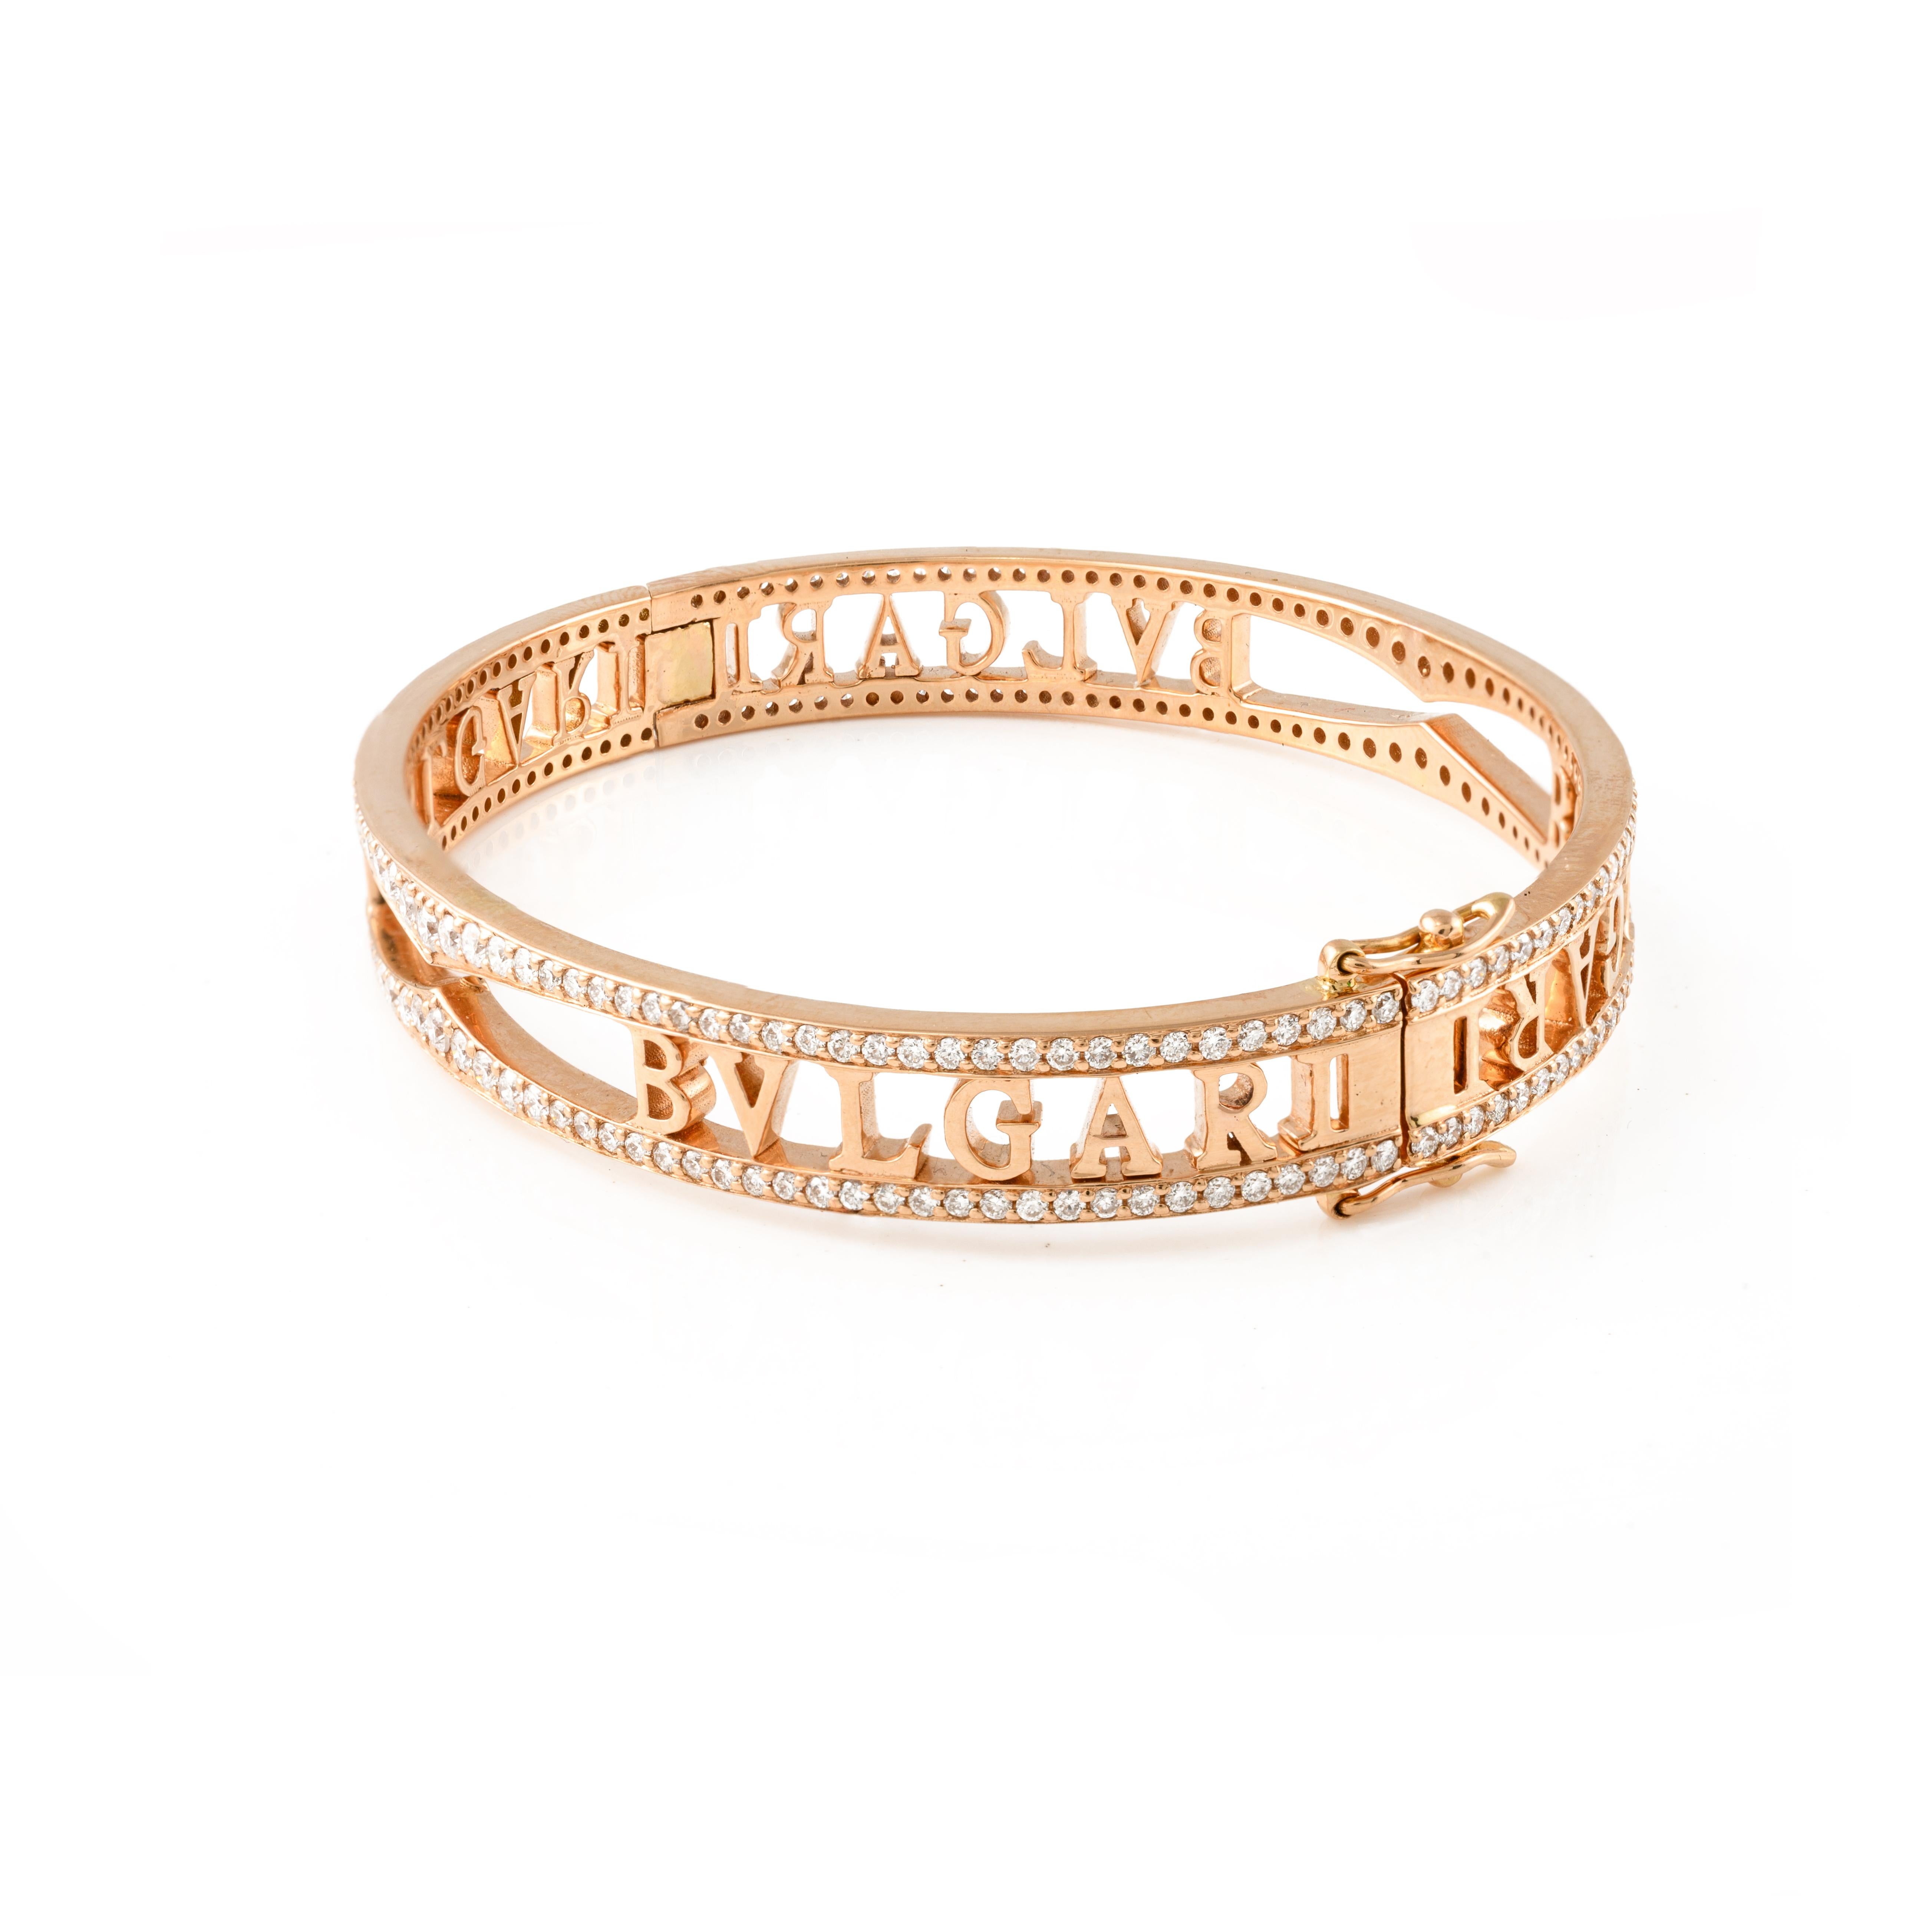 Women's 18k Solid Rose Gold 2.35 CTW Diamond Bracelet, Fine Diamond Jewelry For Her For Sale